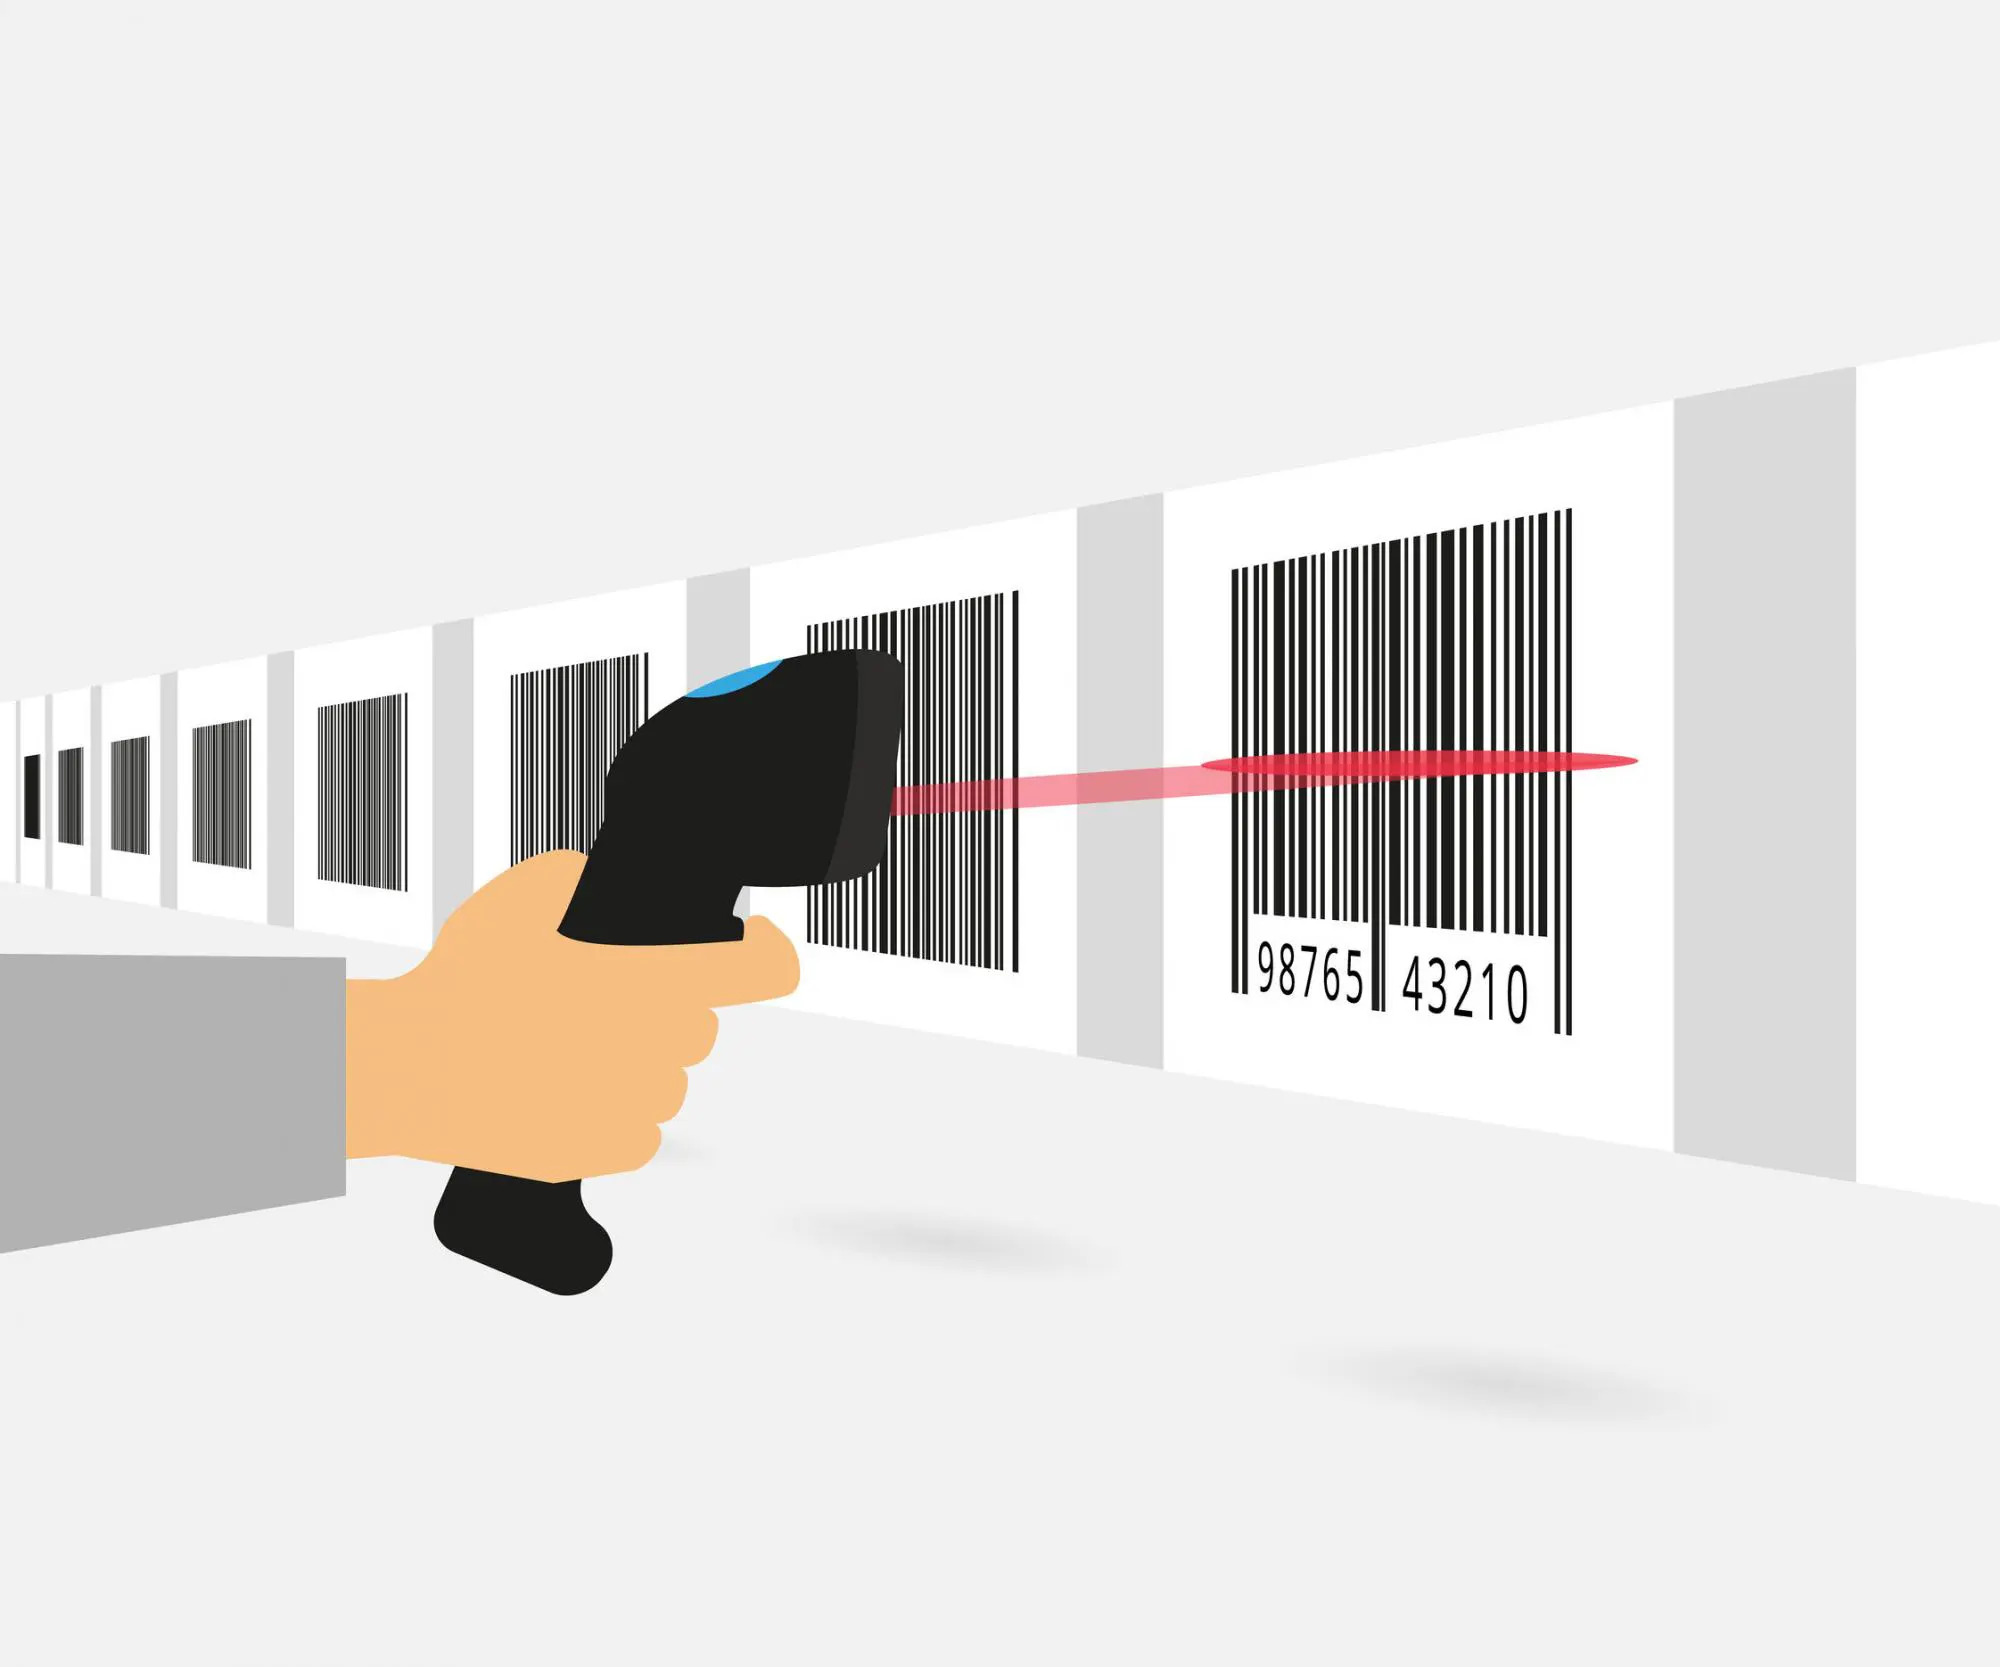 scanning barcodes - SKU's